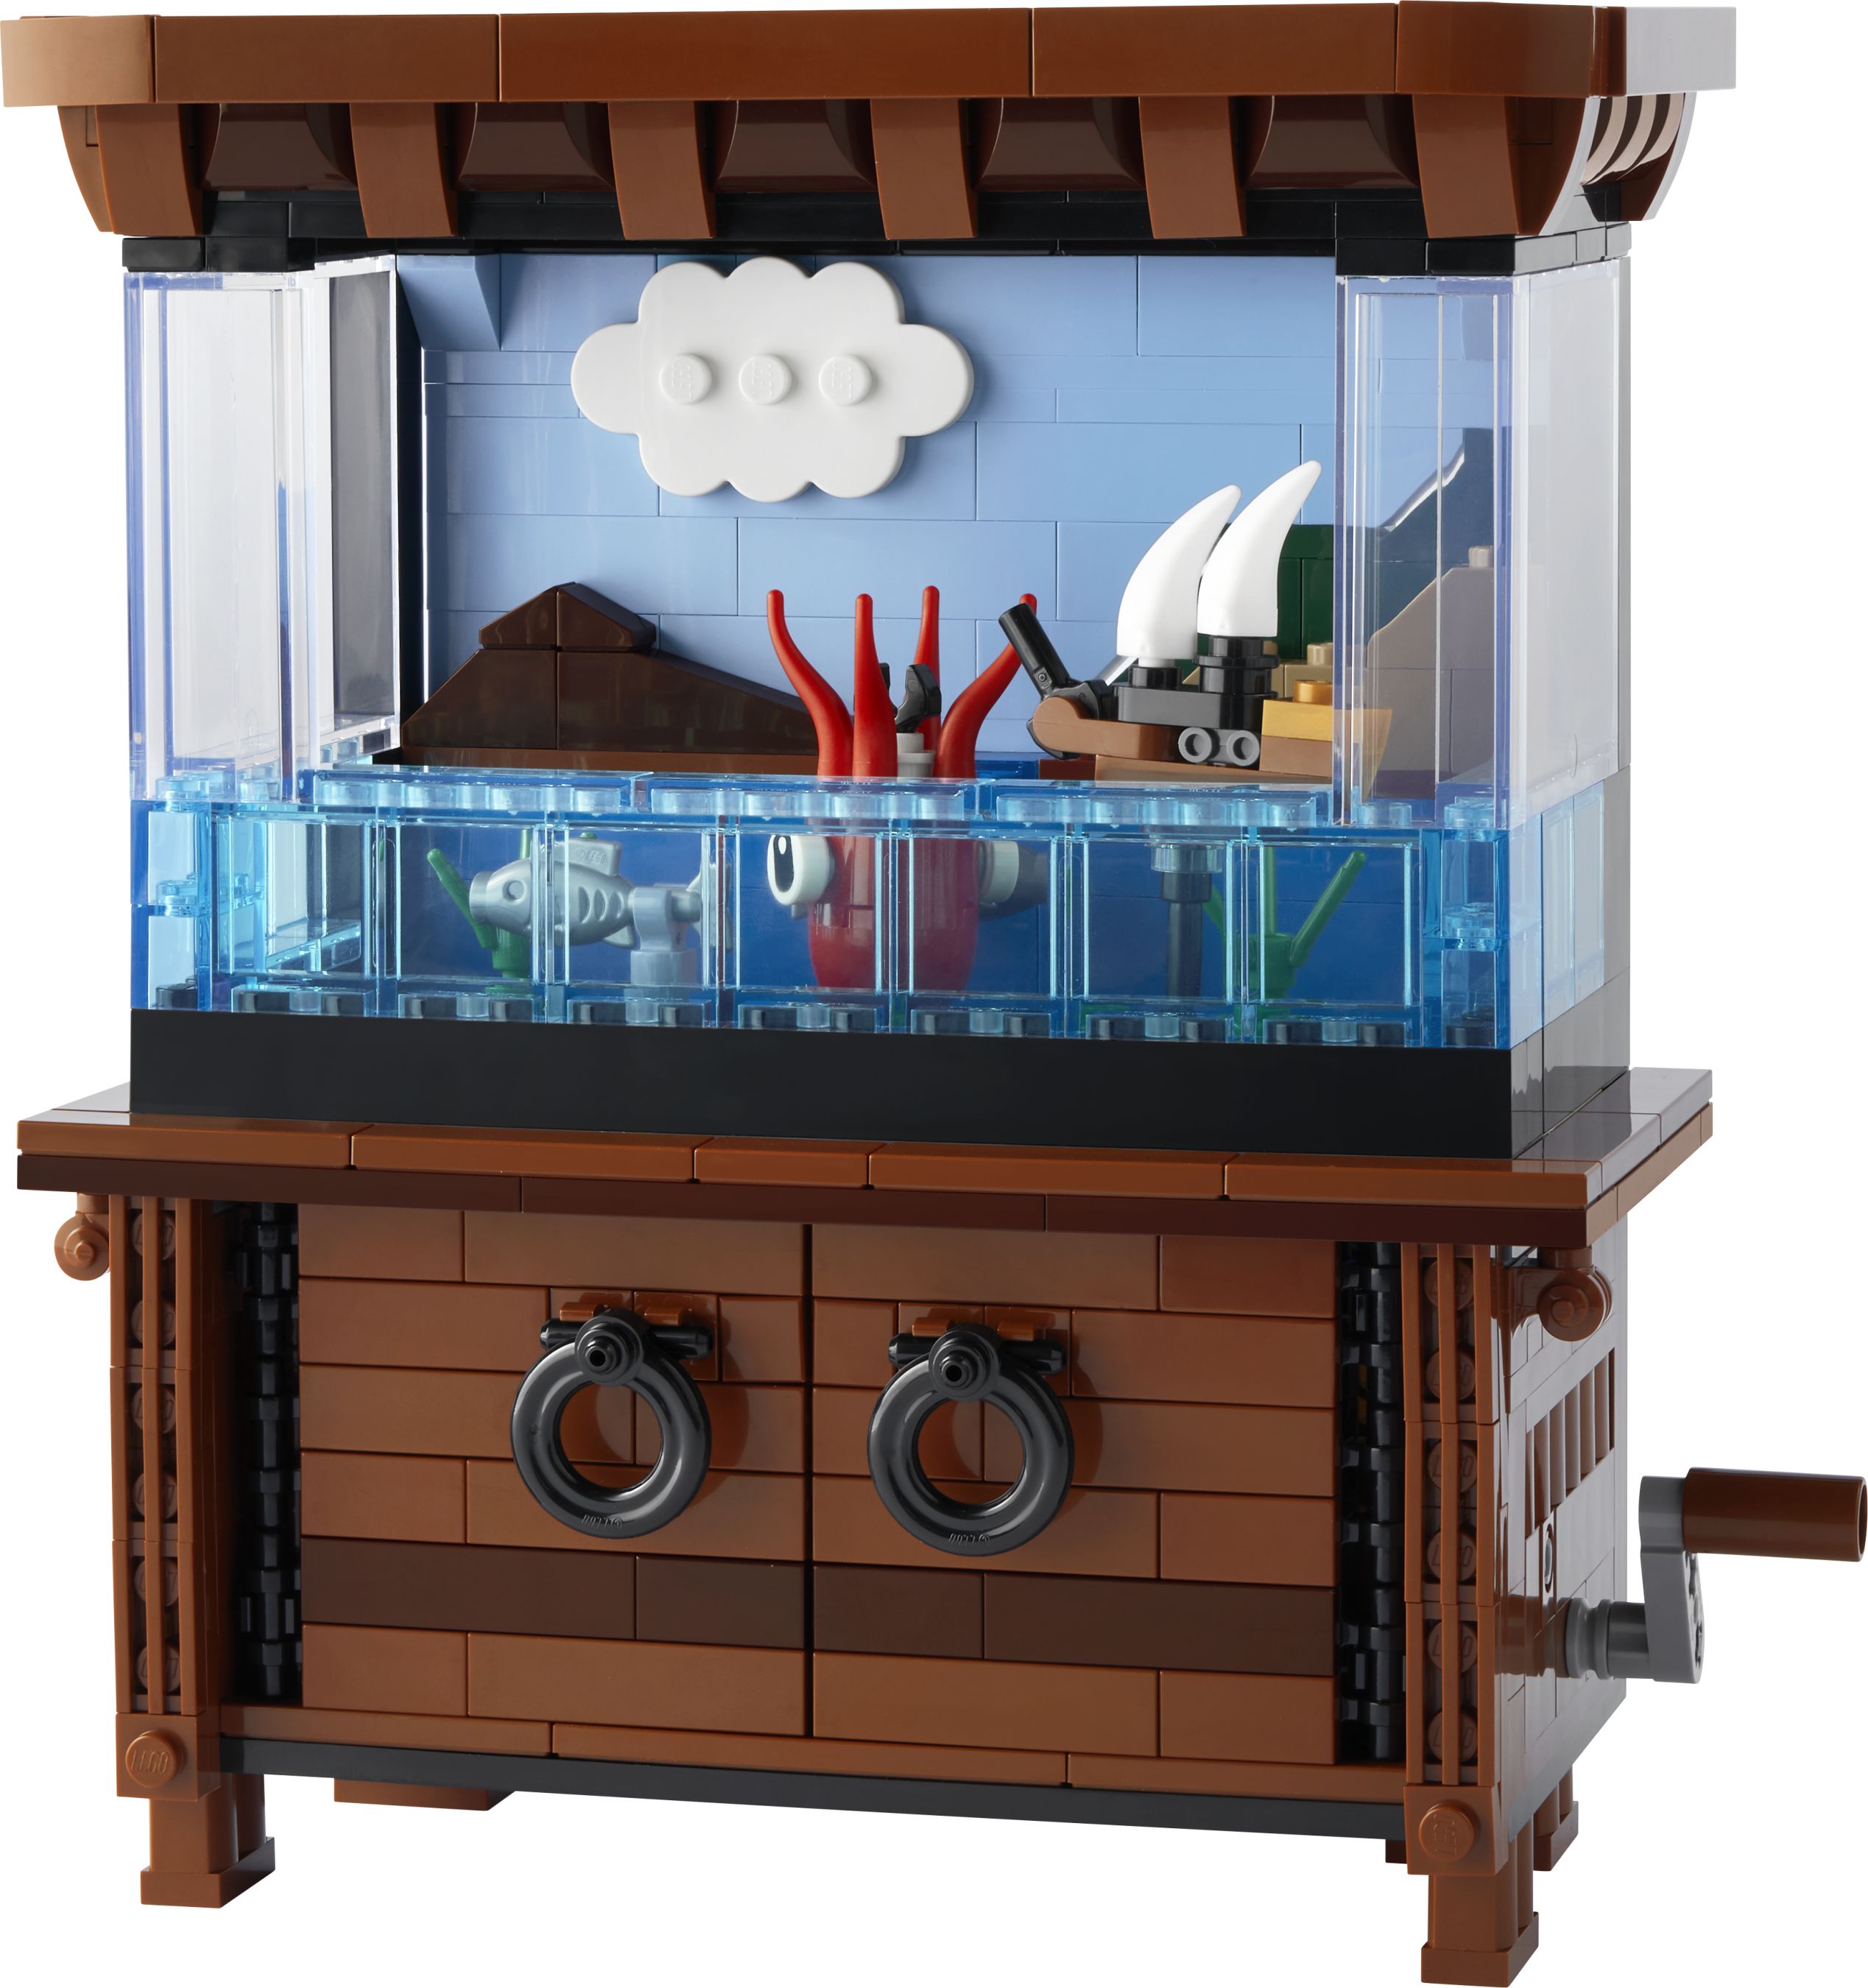 LEGO Bricklink 910015 Clockwork Aquarium! LEGO_910015_front_02.jpg